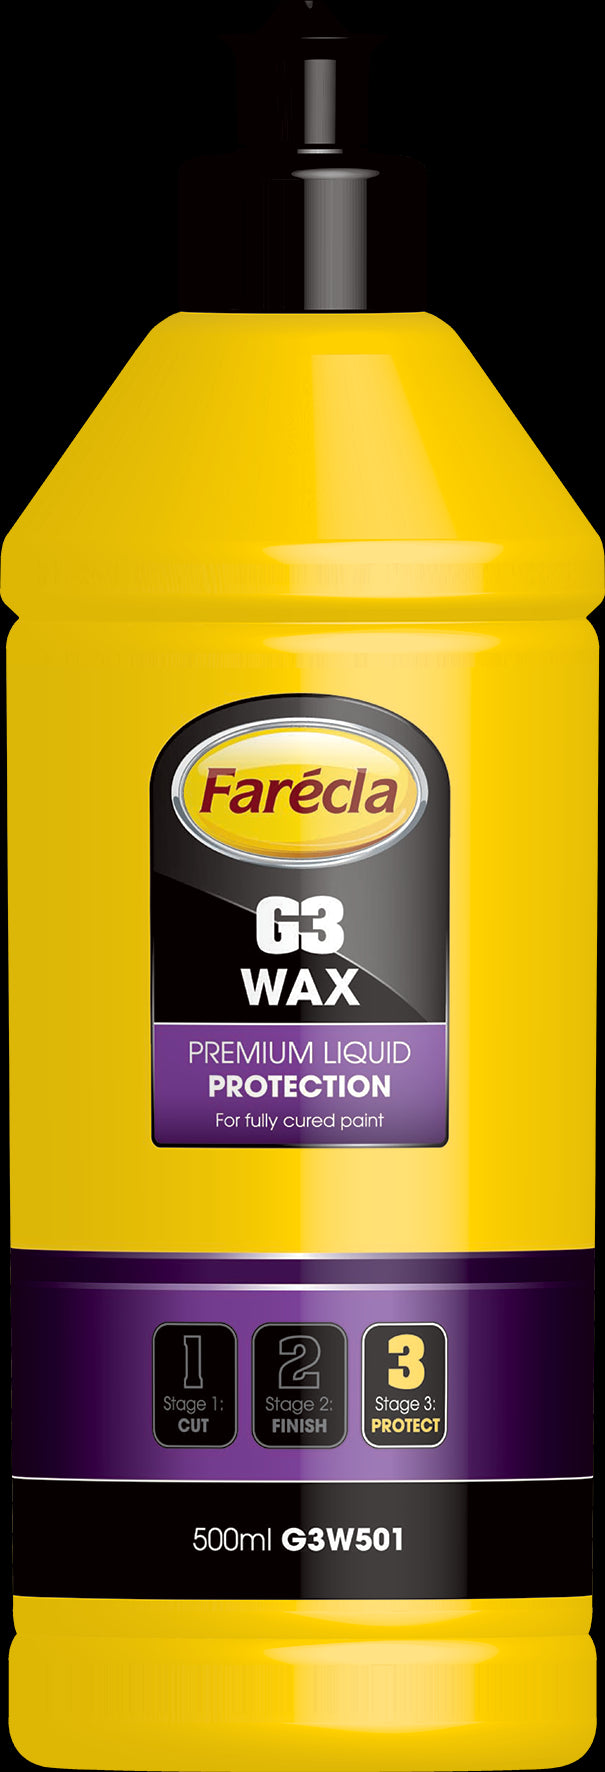 G3W501 G3 Wax Premium Liquid Protection - 500ml